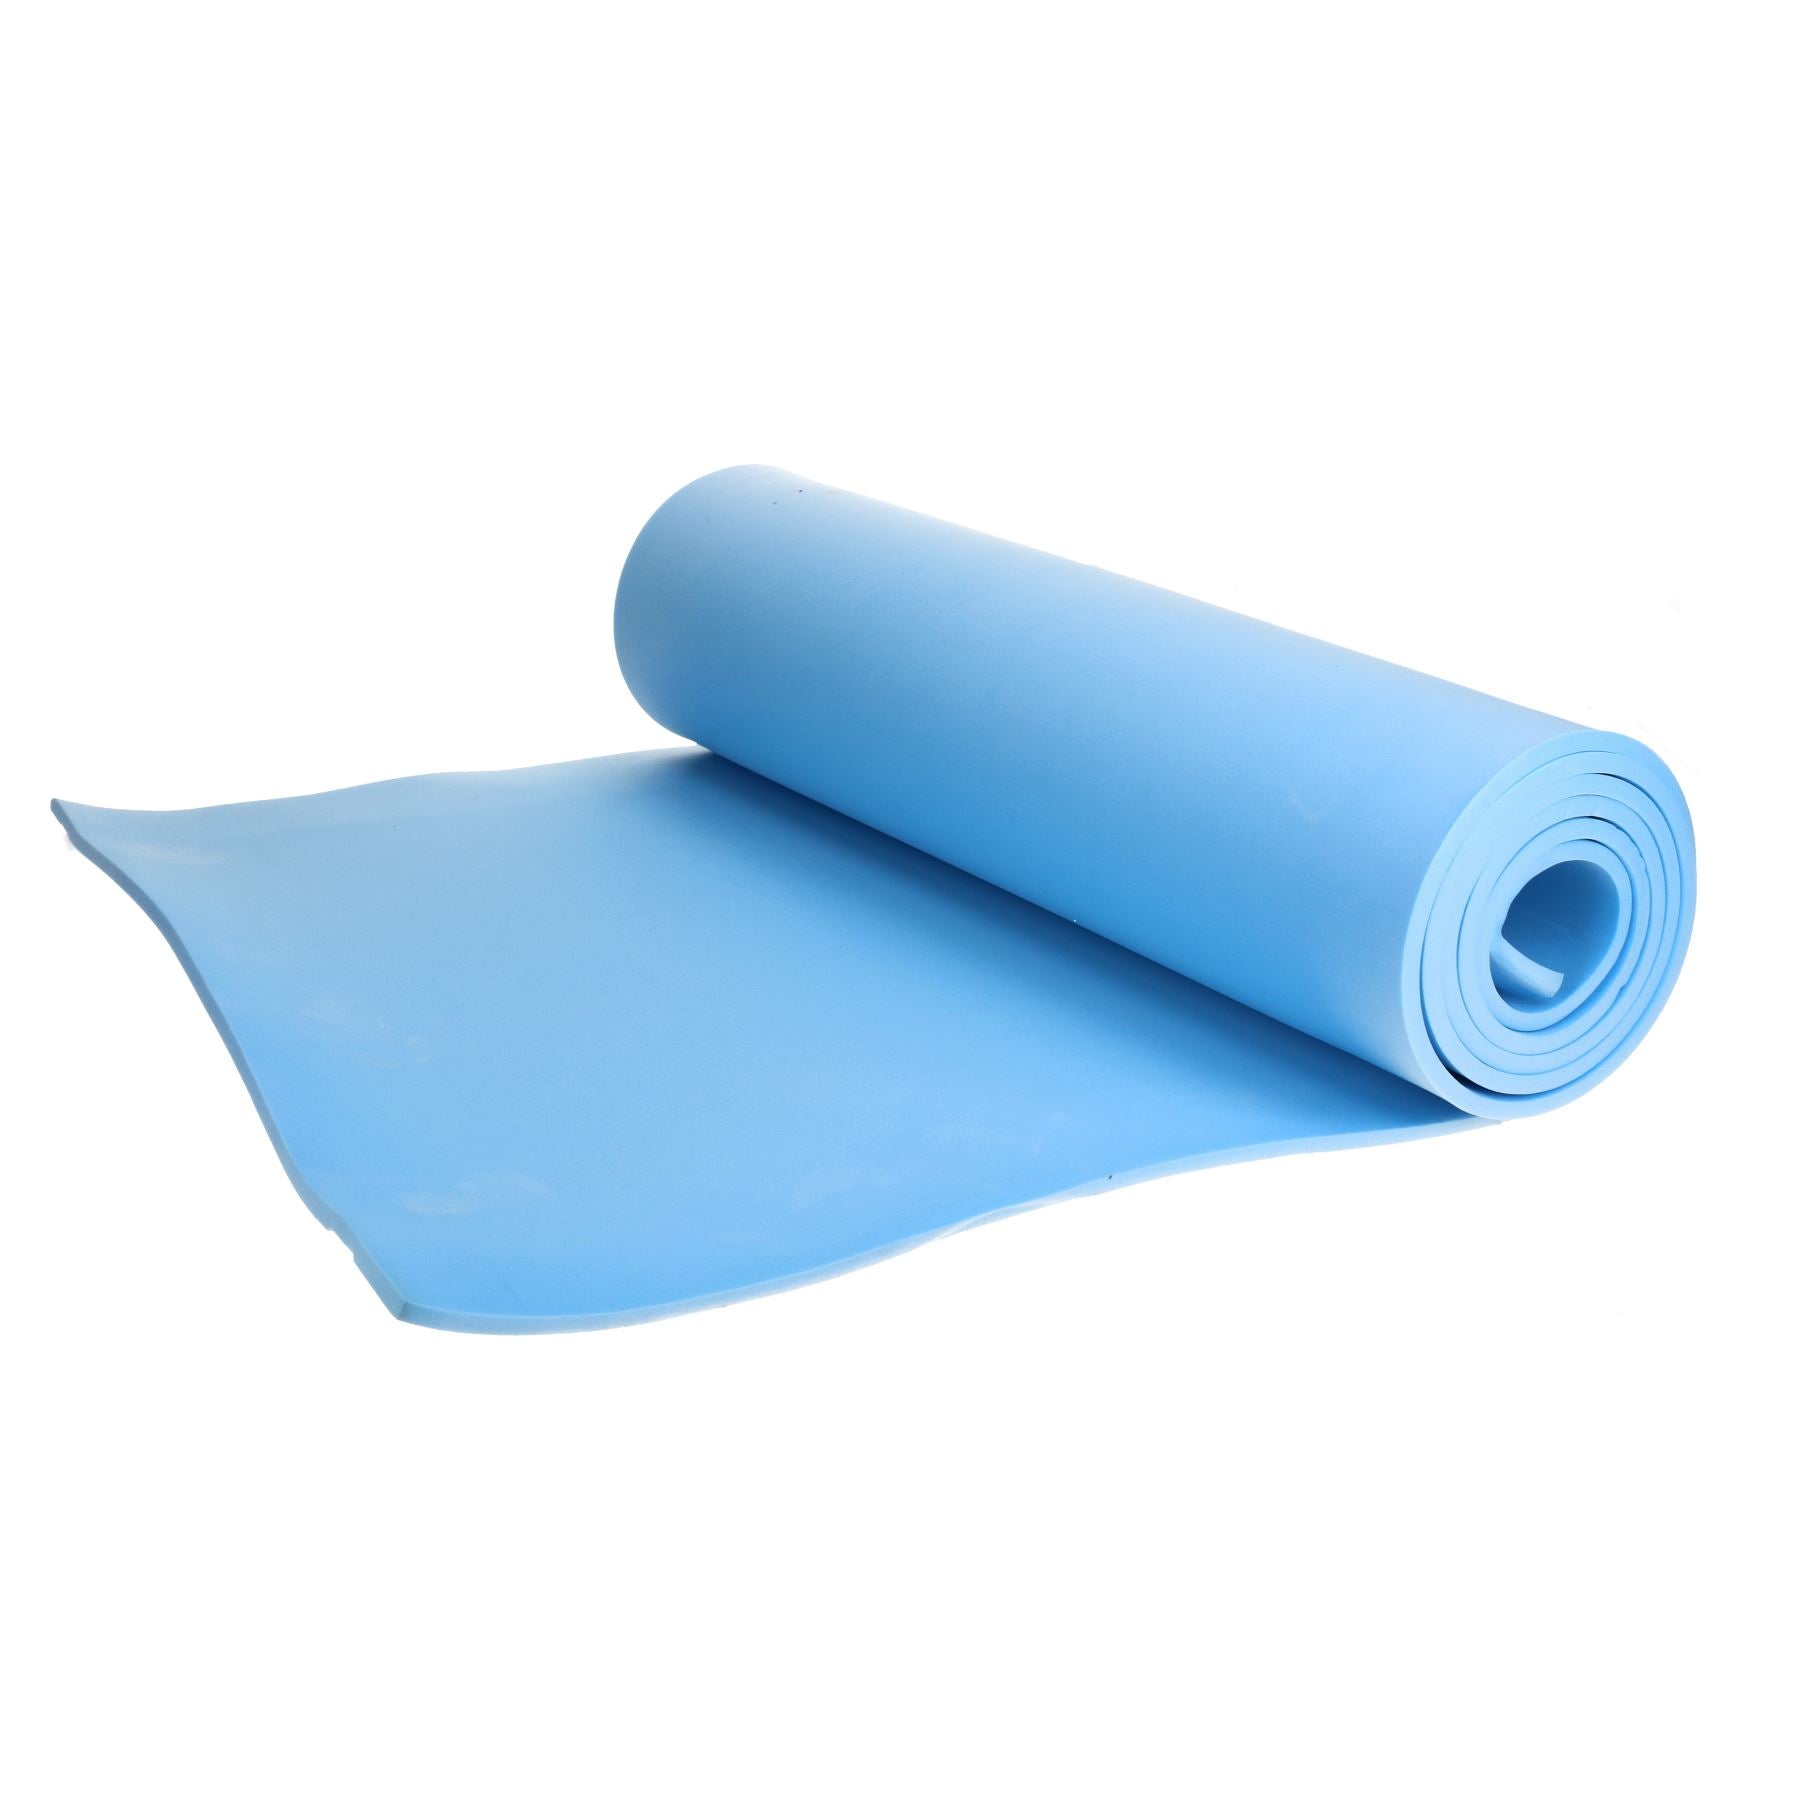 Lightweight Foam Camping Roll / Yoga / Exercise Mat Sleeping Festival Blue